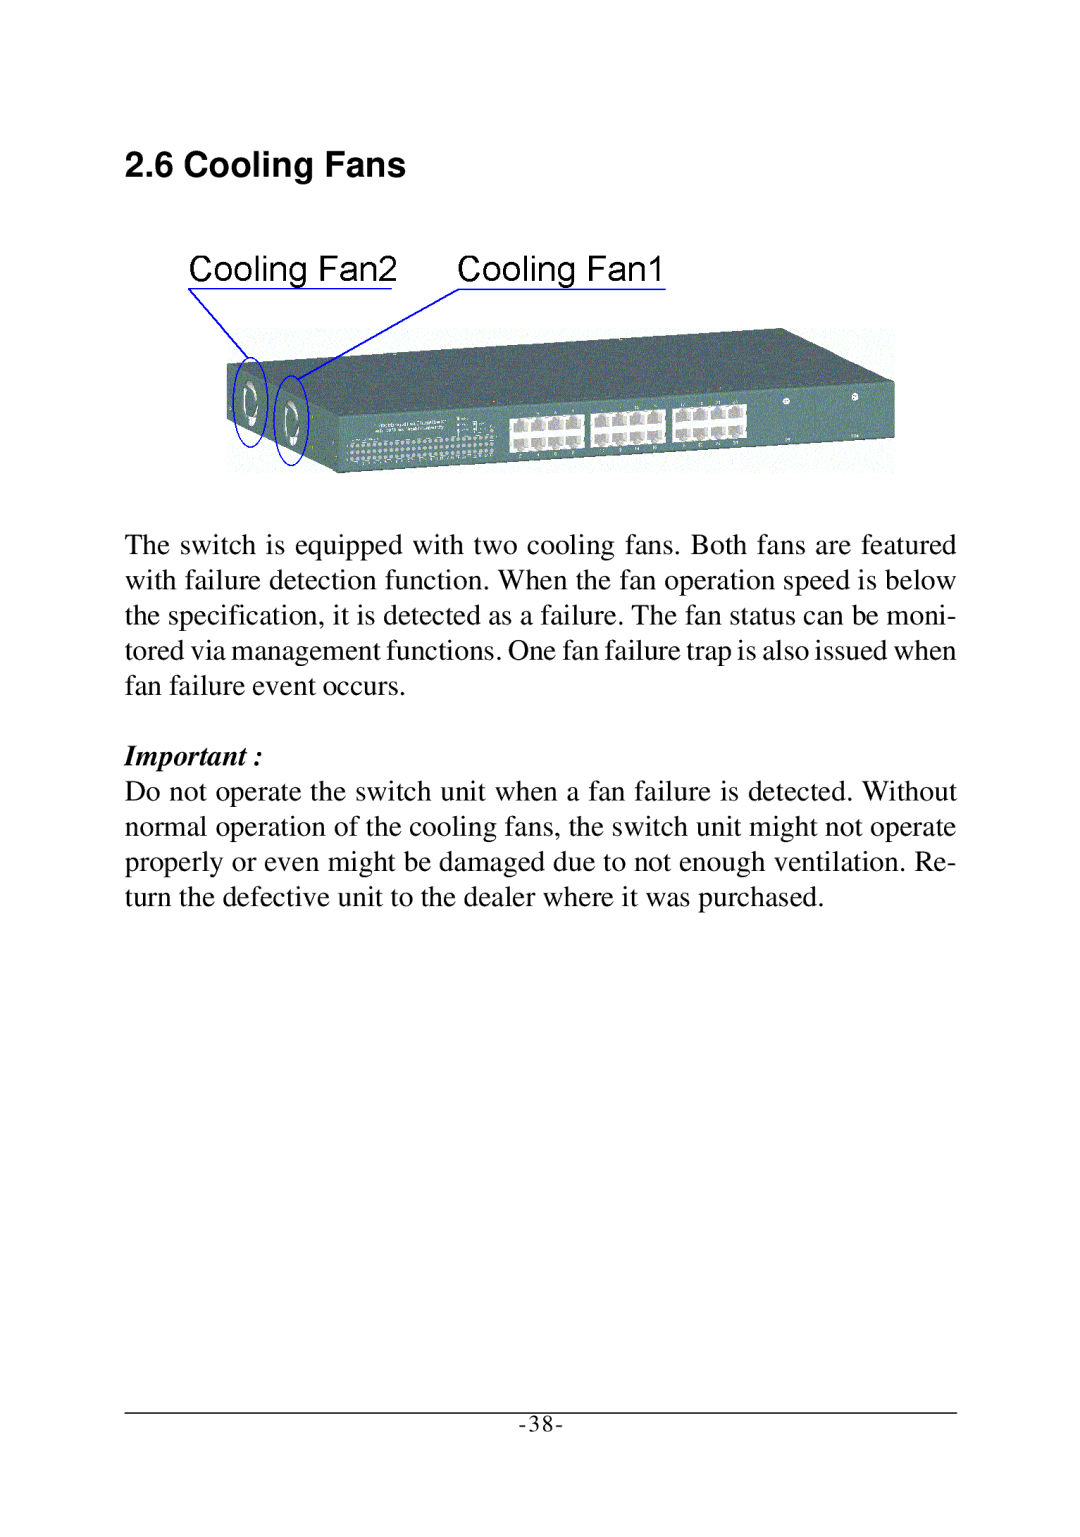 KTI Networks KS-2260 operation manual Cooling Fans 